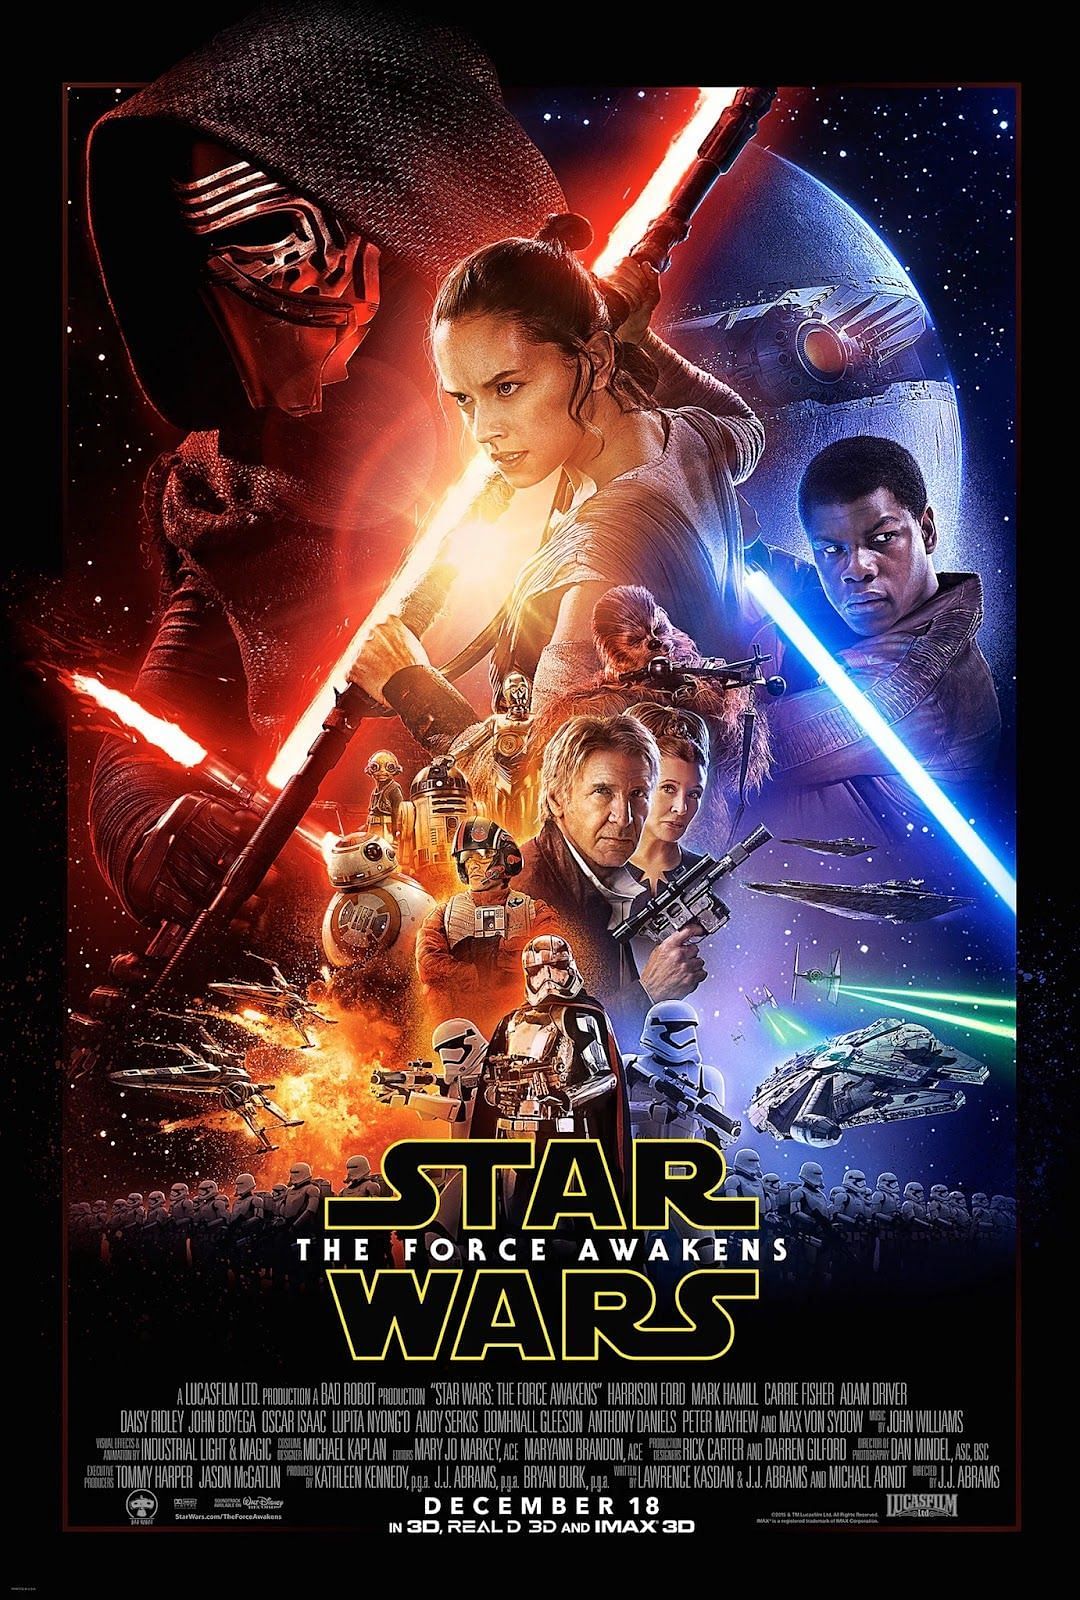 Star Wars Episode VII: The Force Awakens (2015)